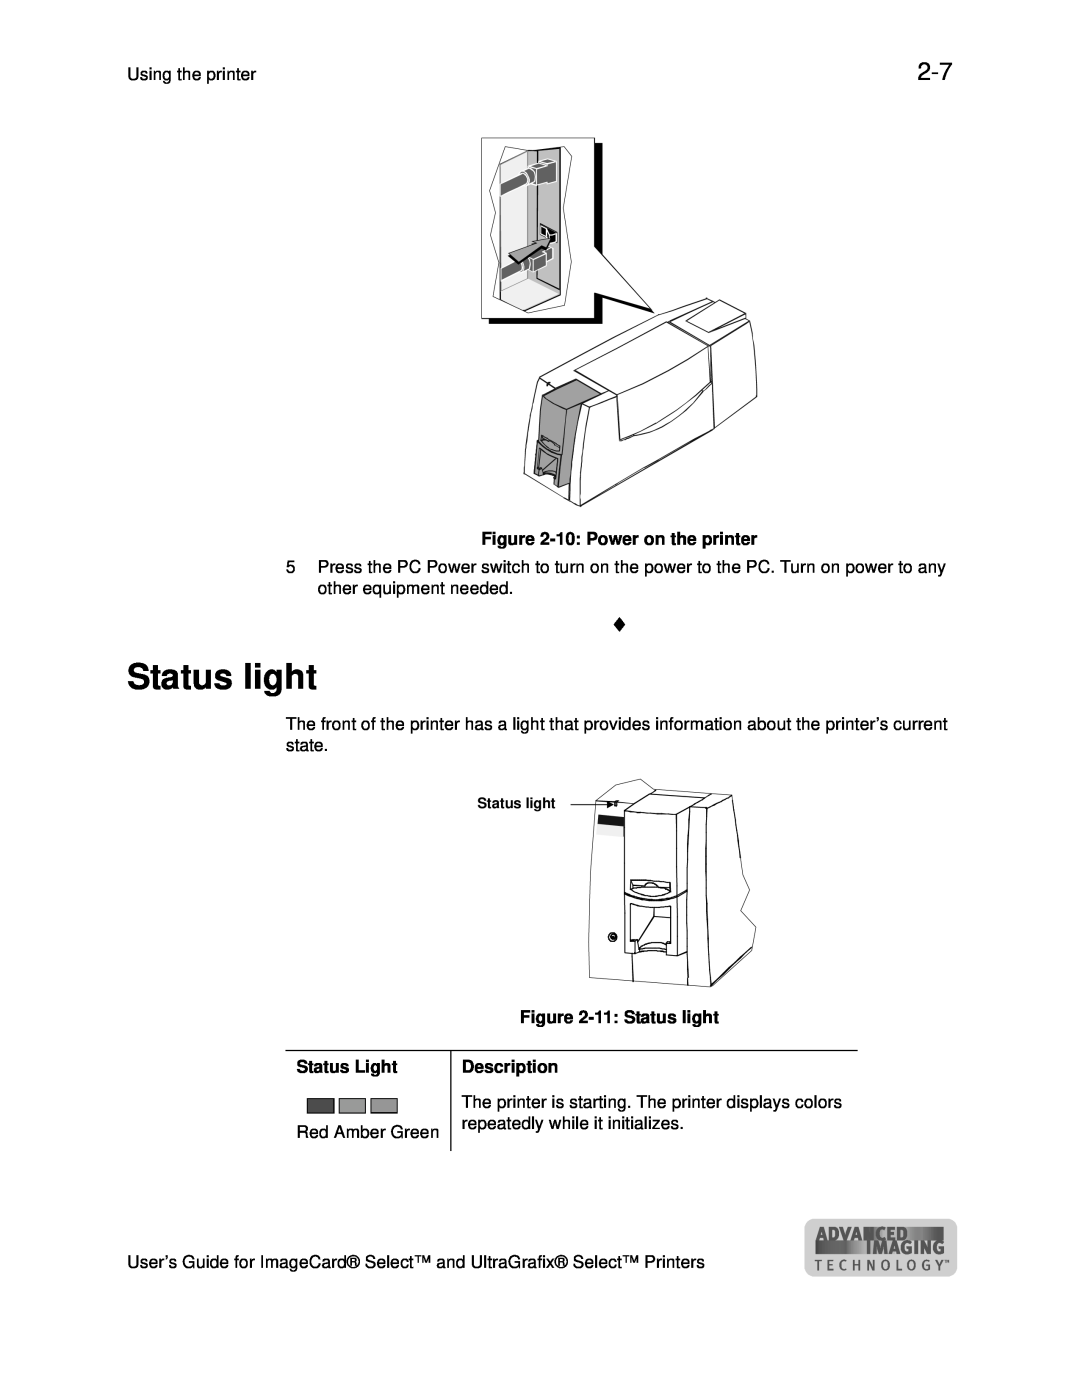 Datacard Group ImageCard SelectTM and UltraGrafix SelectTM Printers manual 10 Power on the printer, 11 Status light 